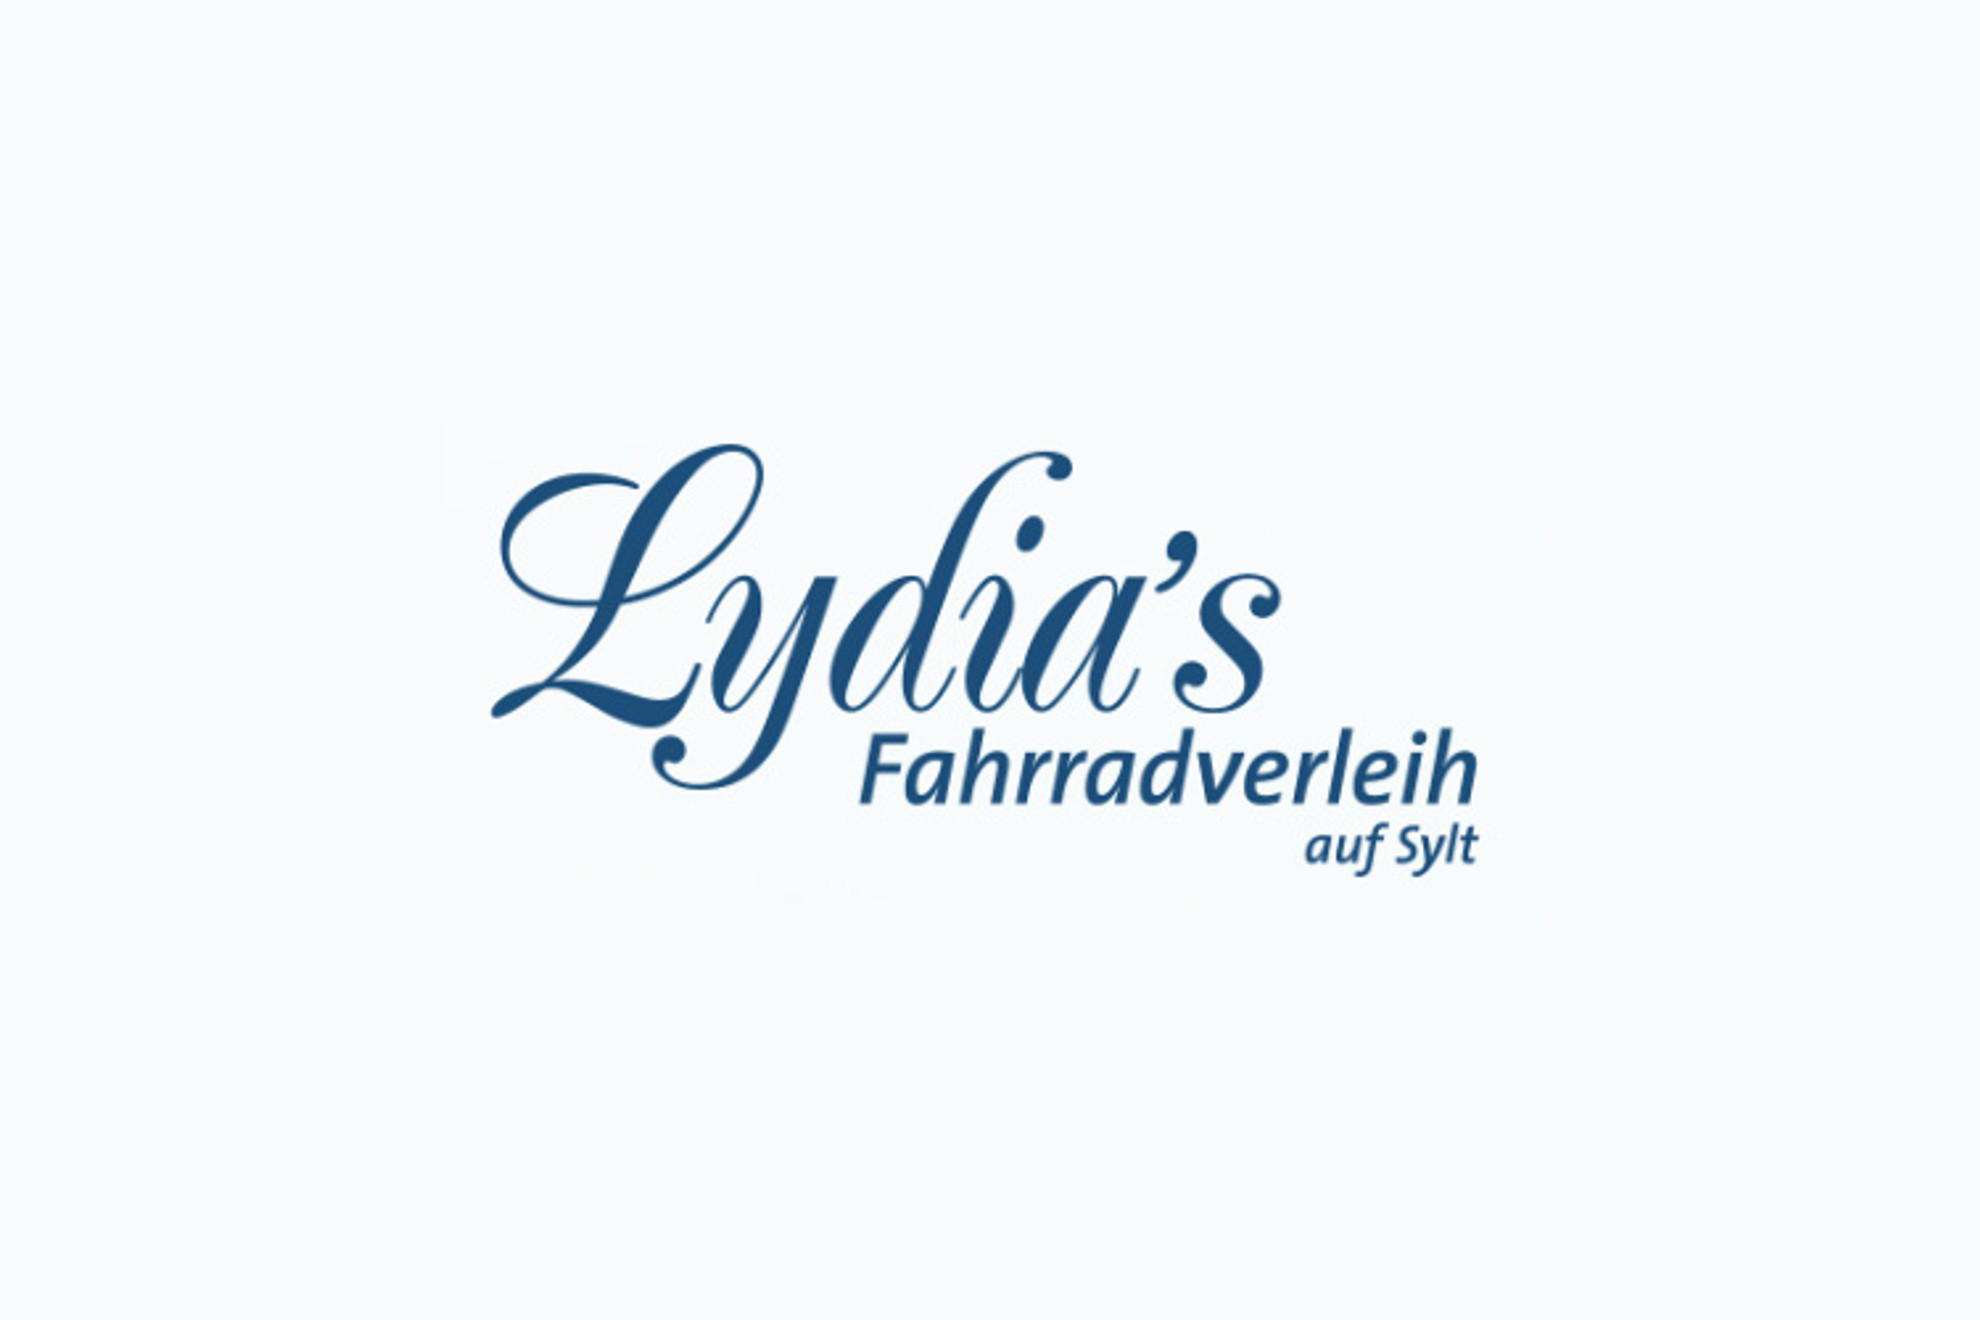 lydias-fahrradverleih-logo.jpg